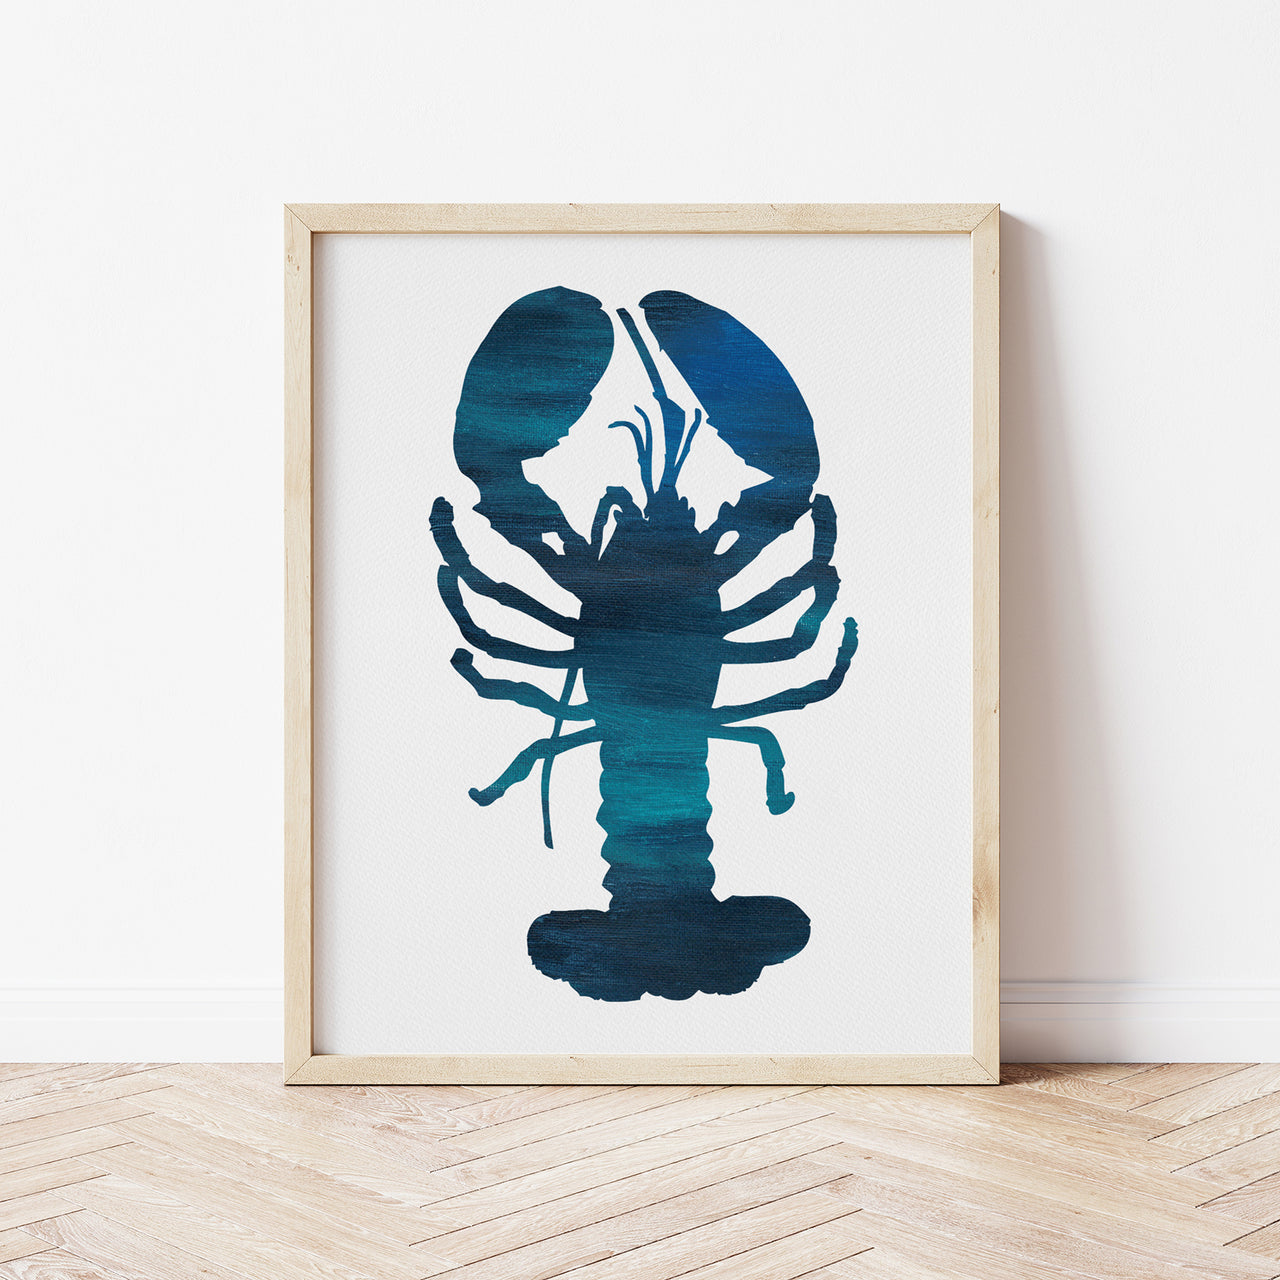 Blue lobster art print by Gert & Co